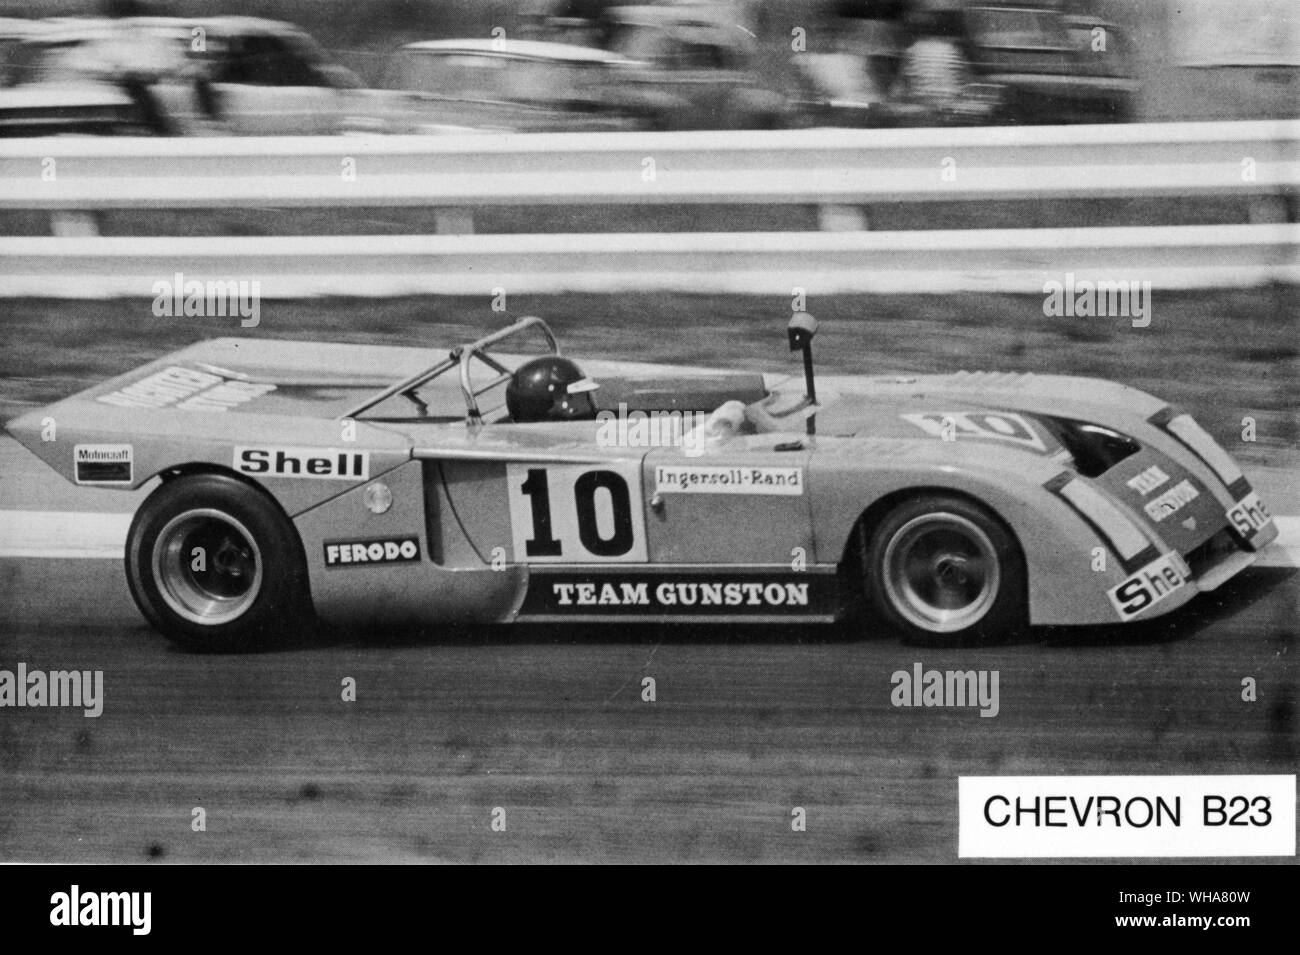 1973 Chevron B23 2 litre sports racing car Stock Photo